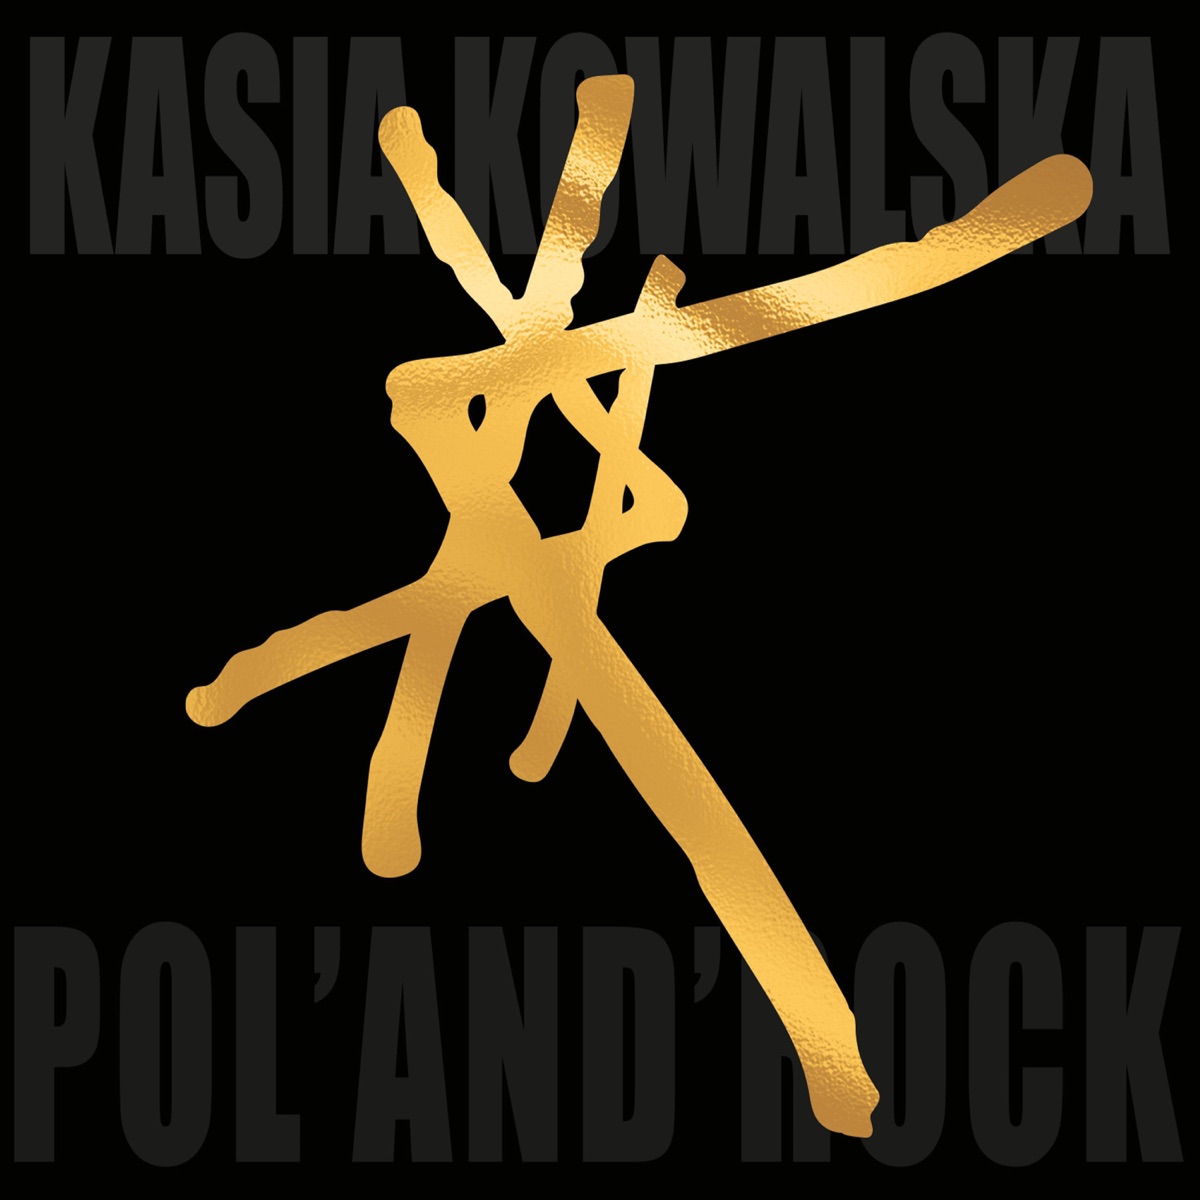 5 by Kasia Kowalska on Apple Music